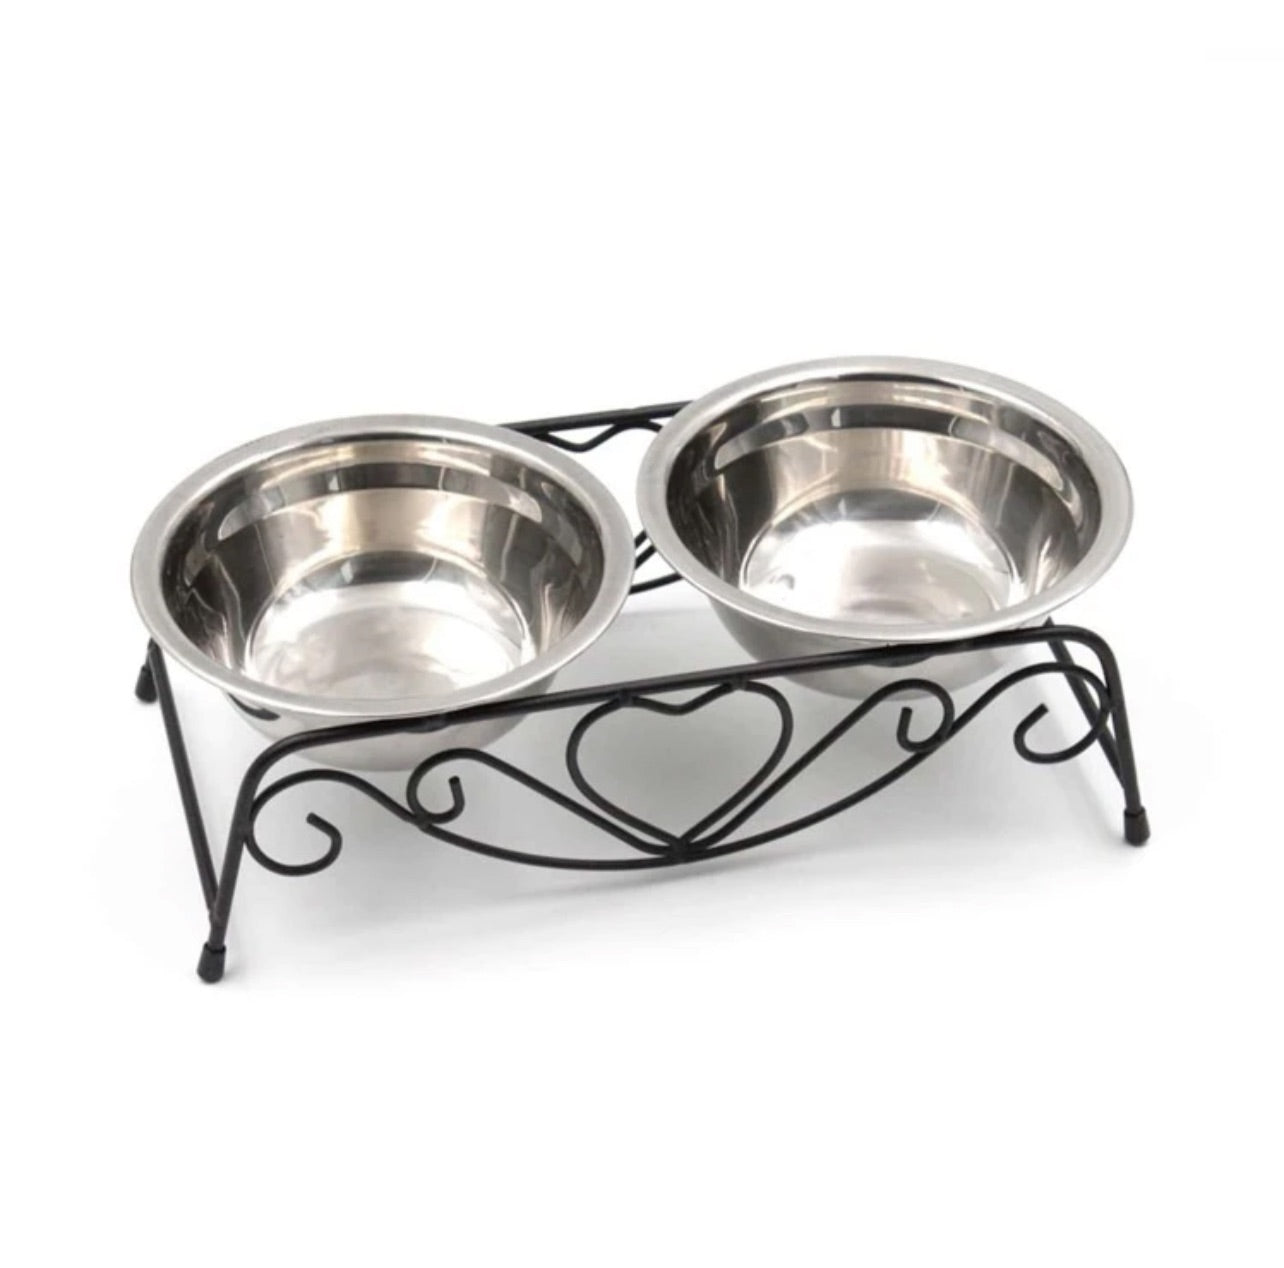 Heart Shaped Metal Twin Dog Feeding Bowl Stand